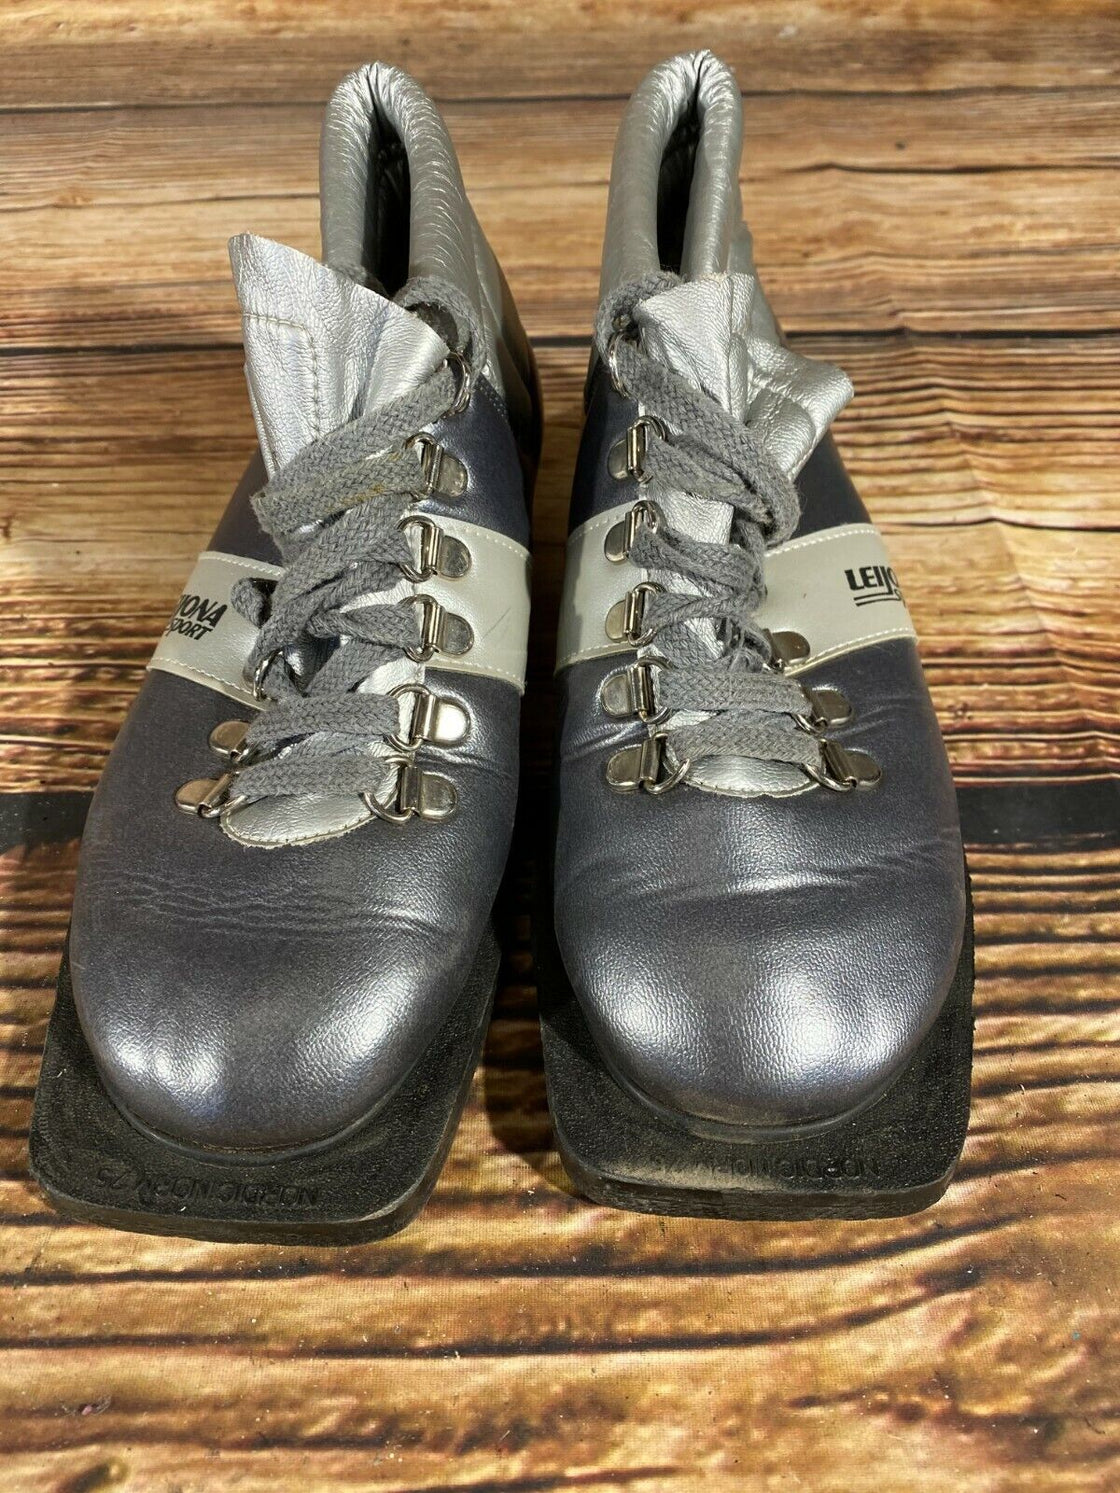 Botas Vintage Cross Country Ski Boots Size EU37 US5 Nordic Norm NN 75mm 3pin